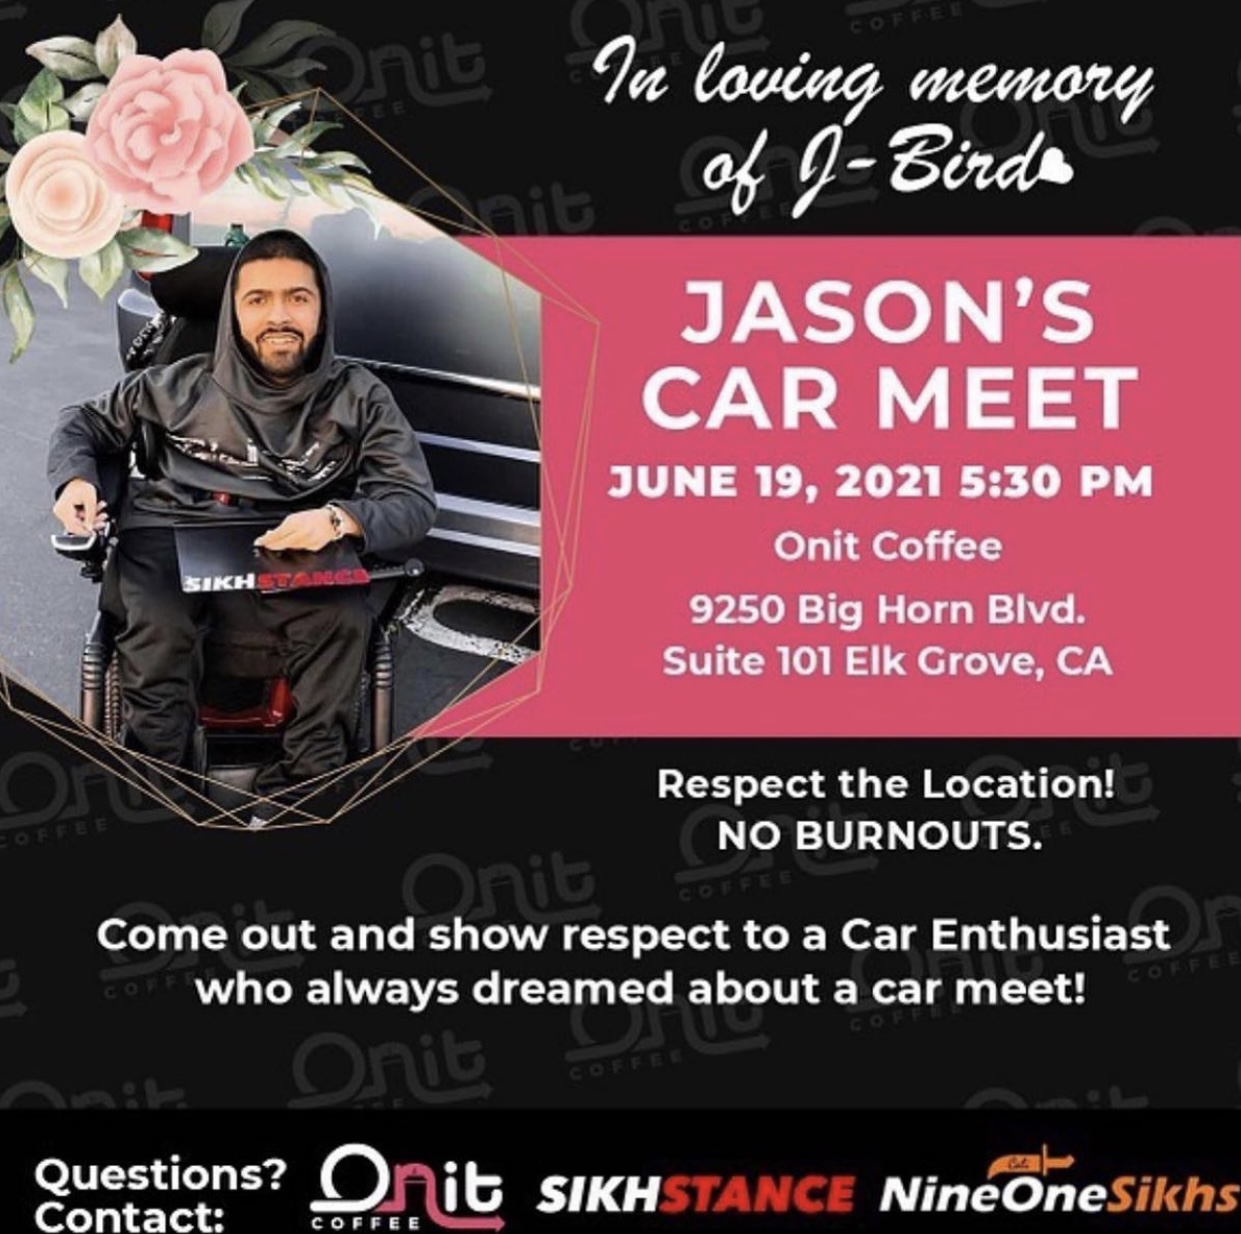 Jason's Car Meet